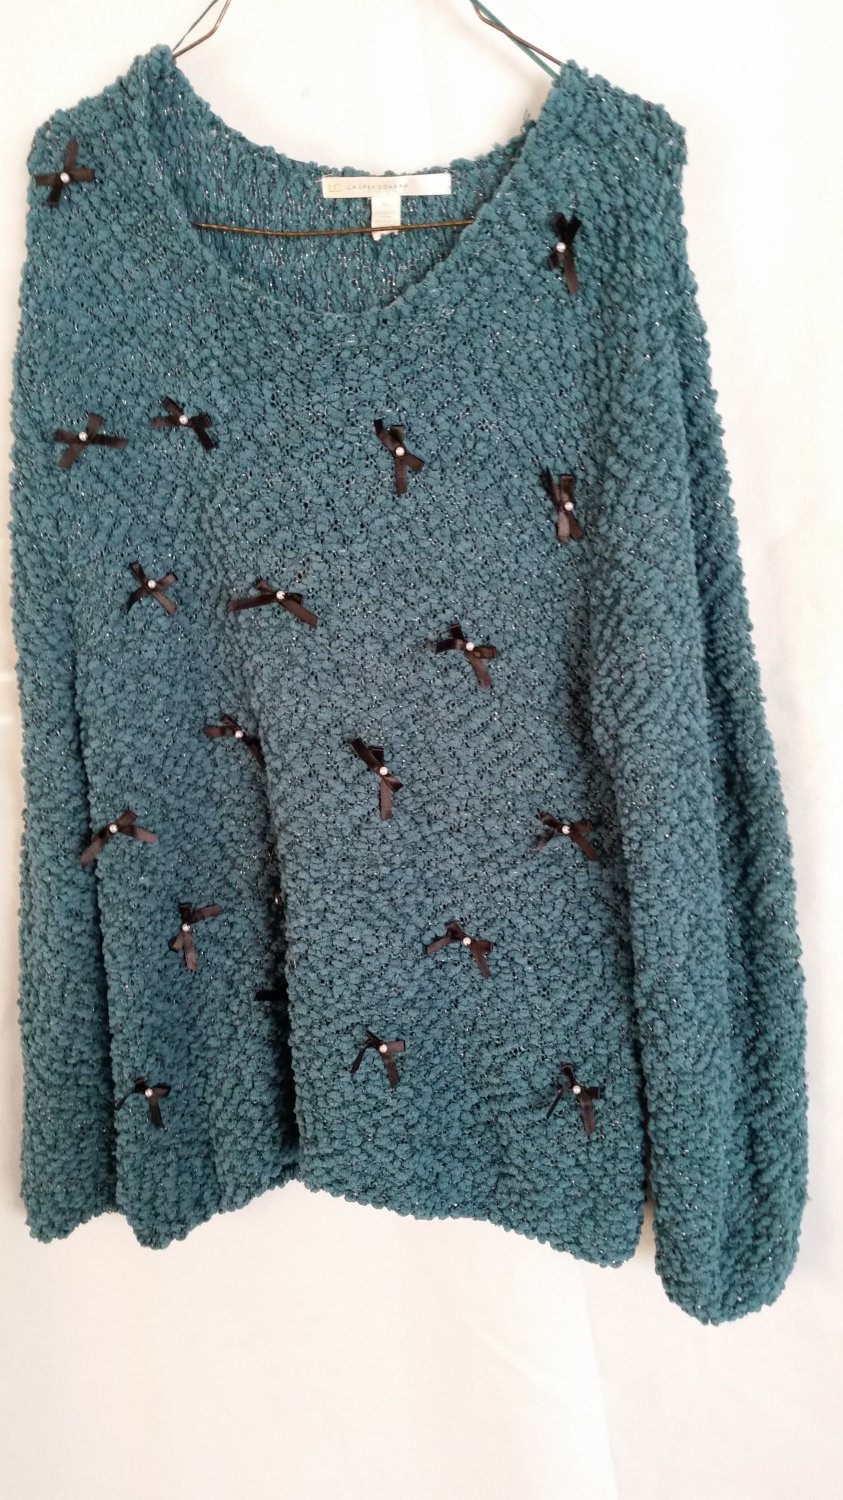 Lauren Conrad Ladies Knit Top